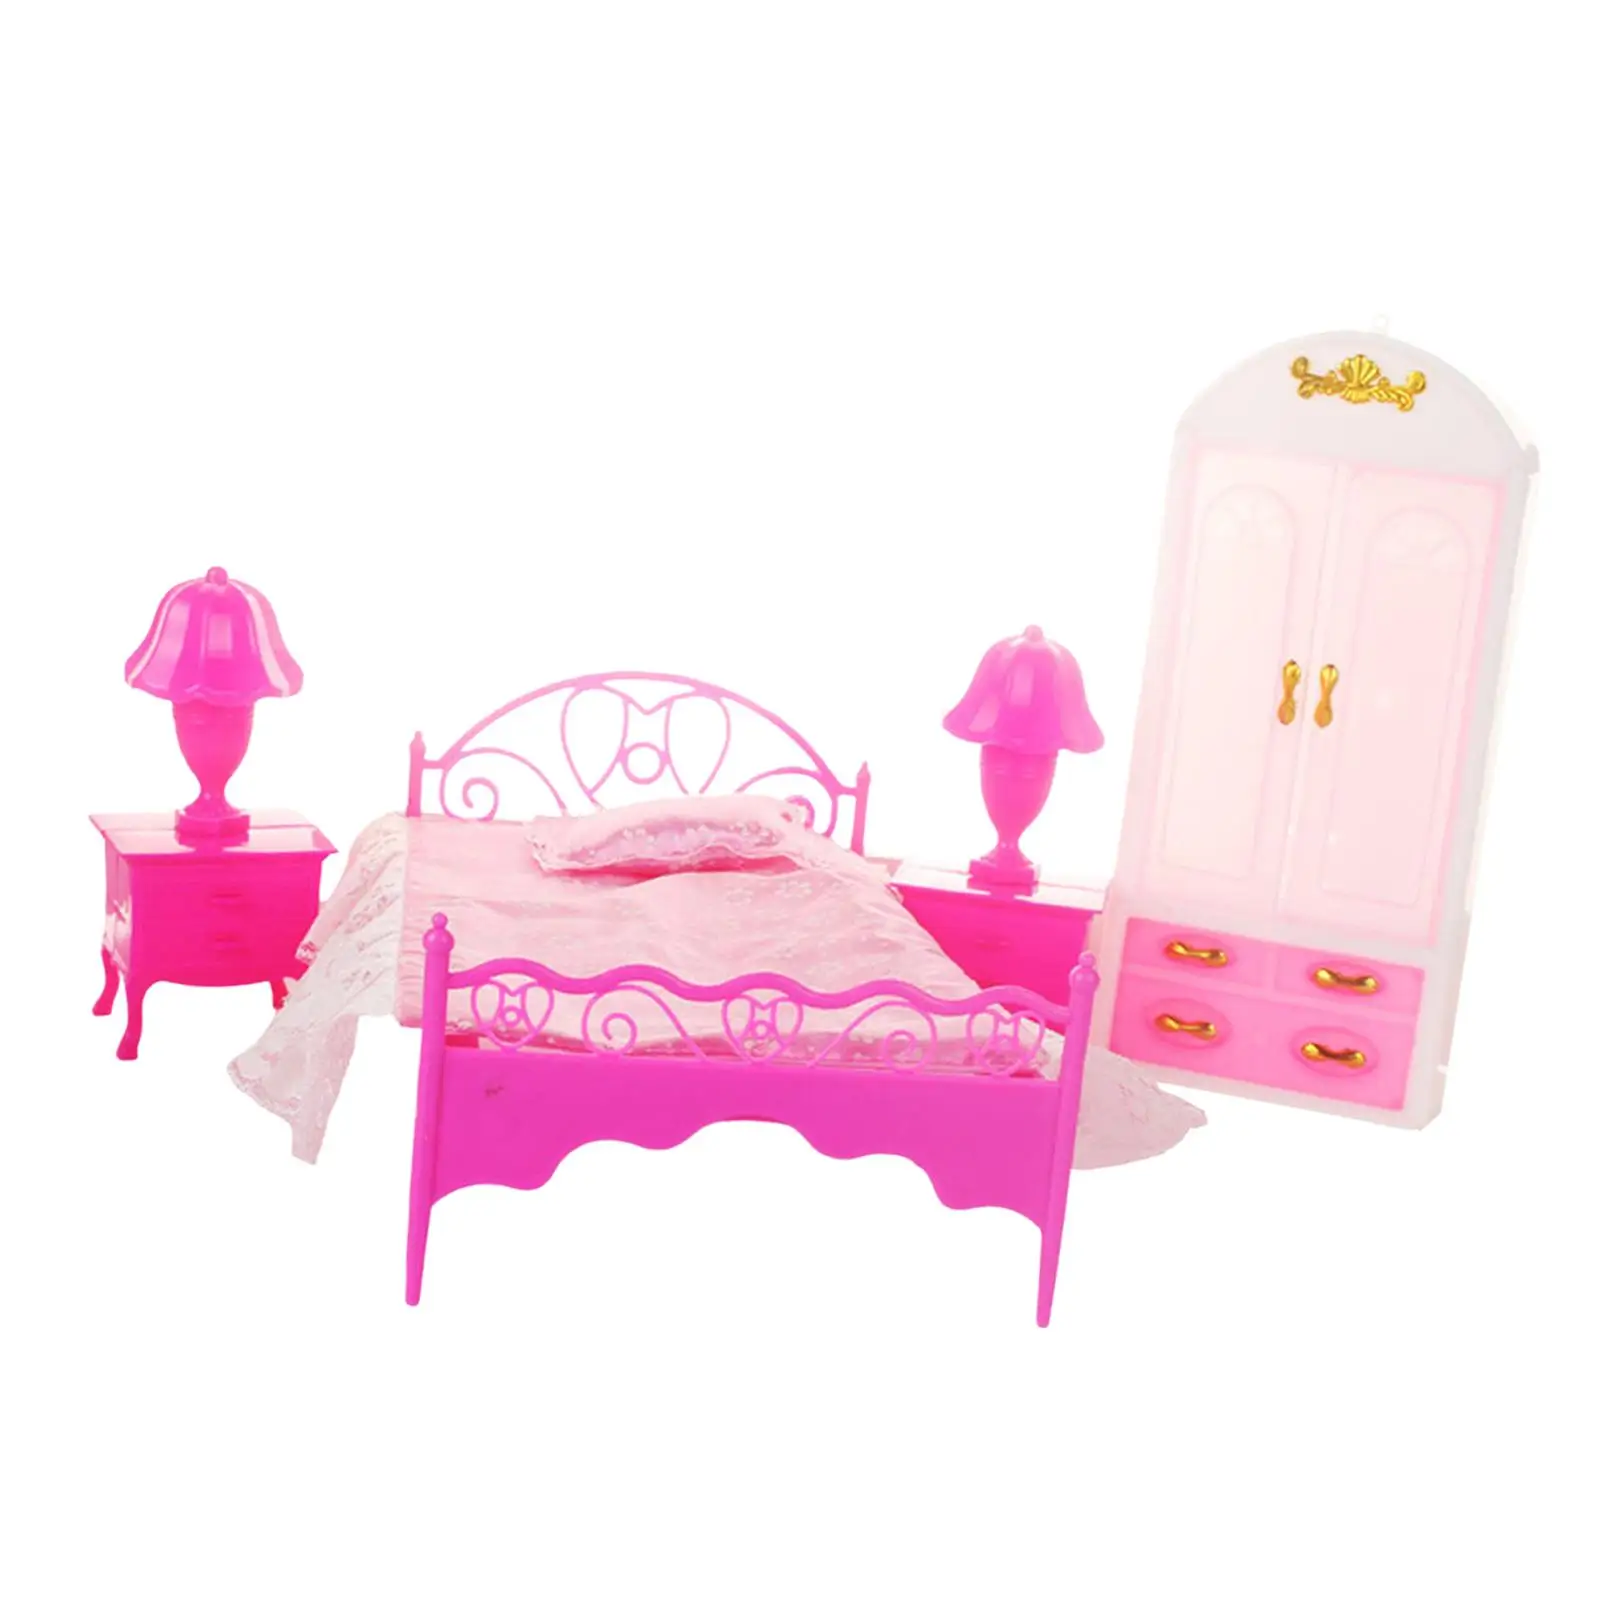 4x 1:6 1:12 Dollhouse Bedroom Model for Decoration Building Miniature Scene